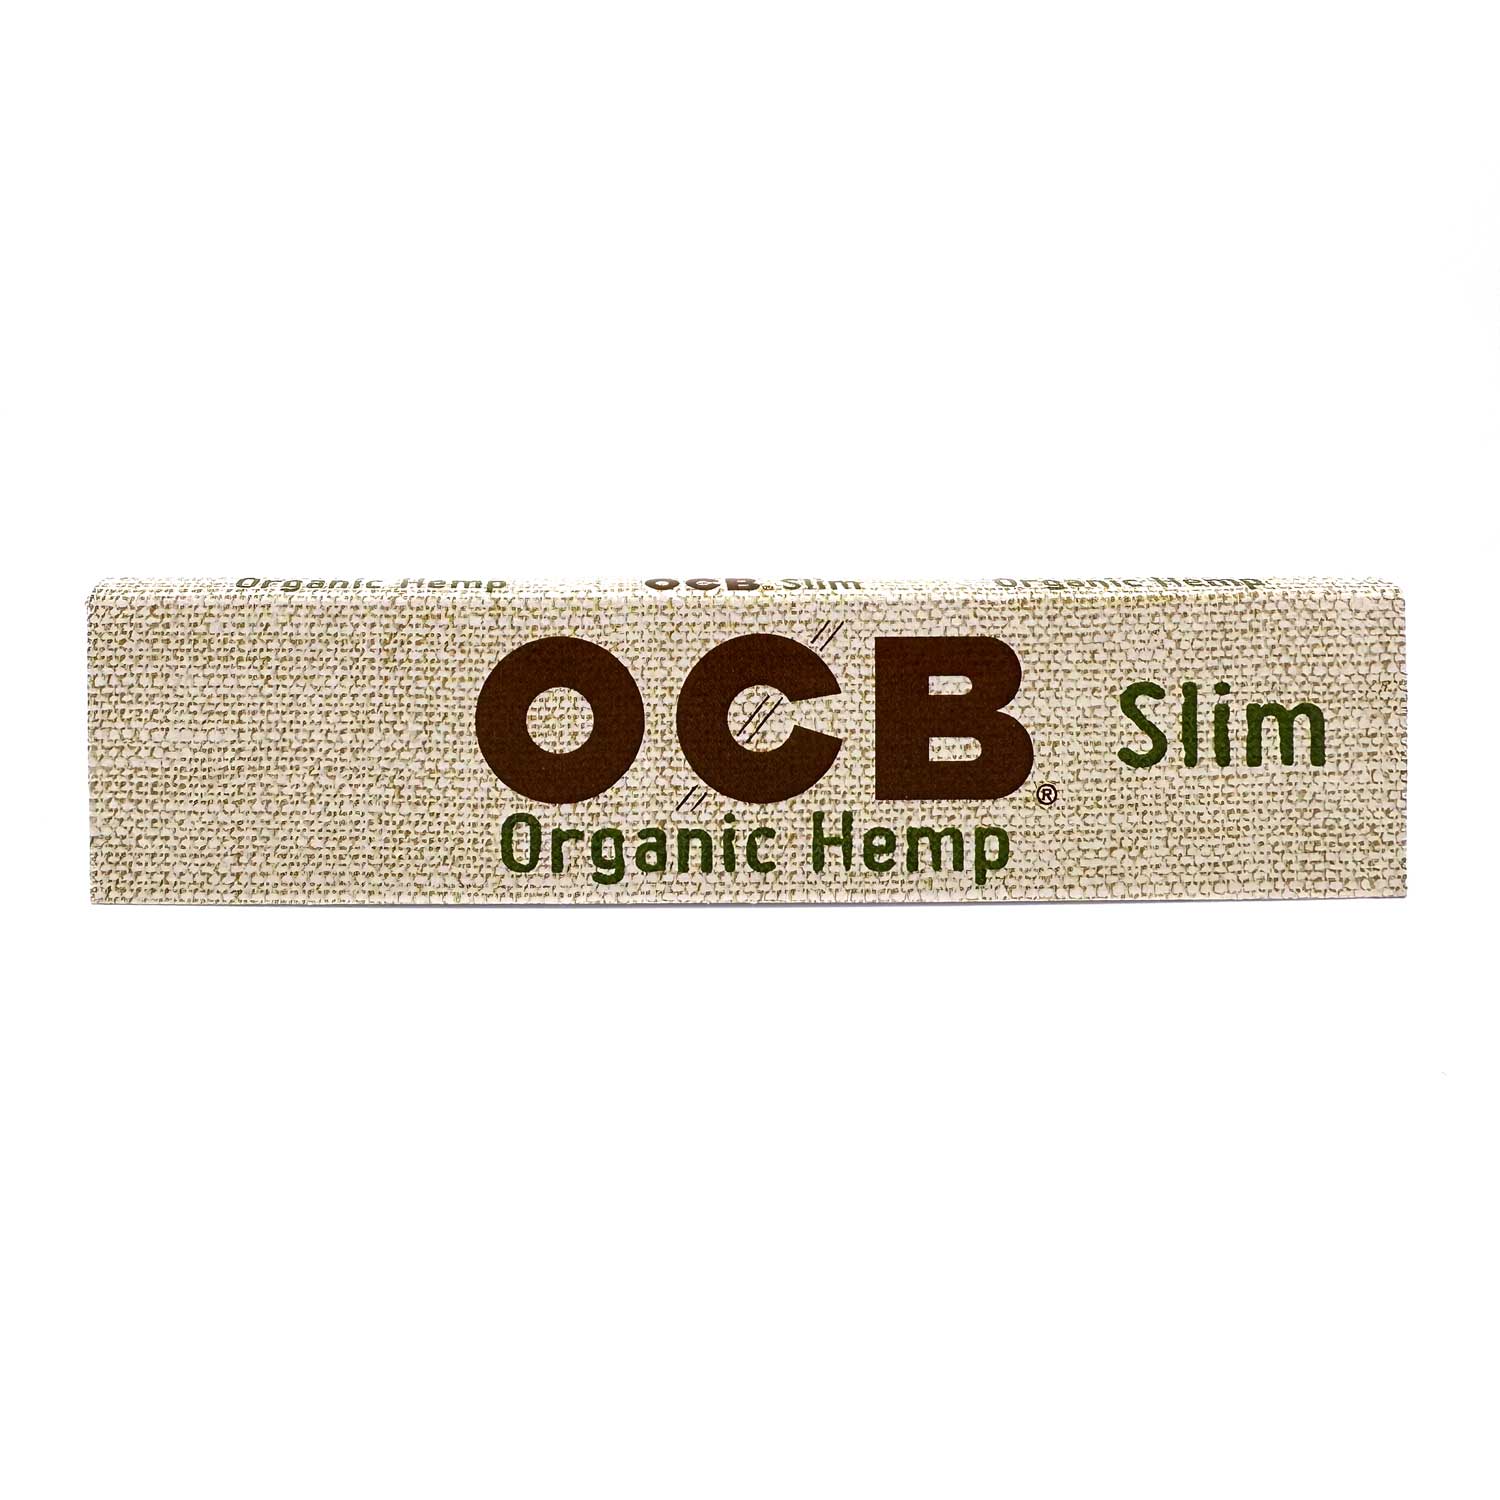 OCB Organic Hemp King Slim Rolling Papers